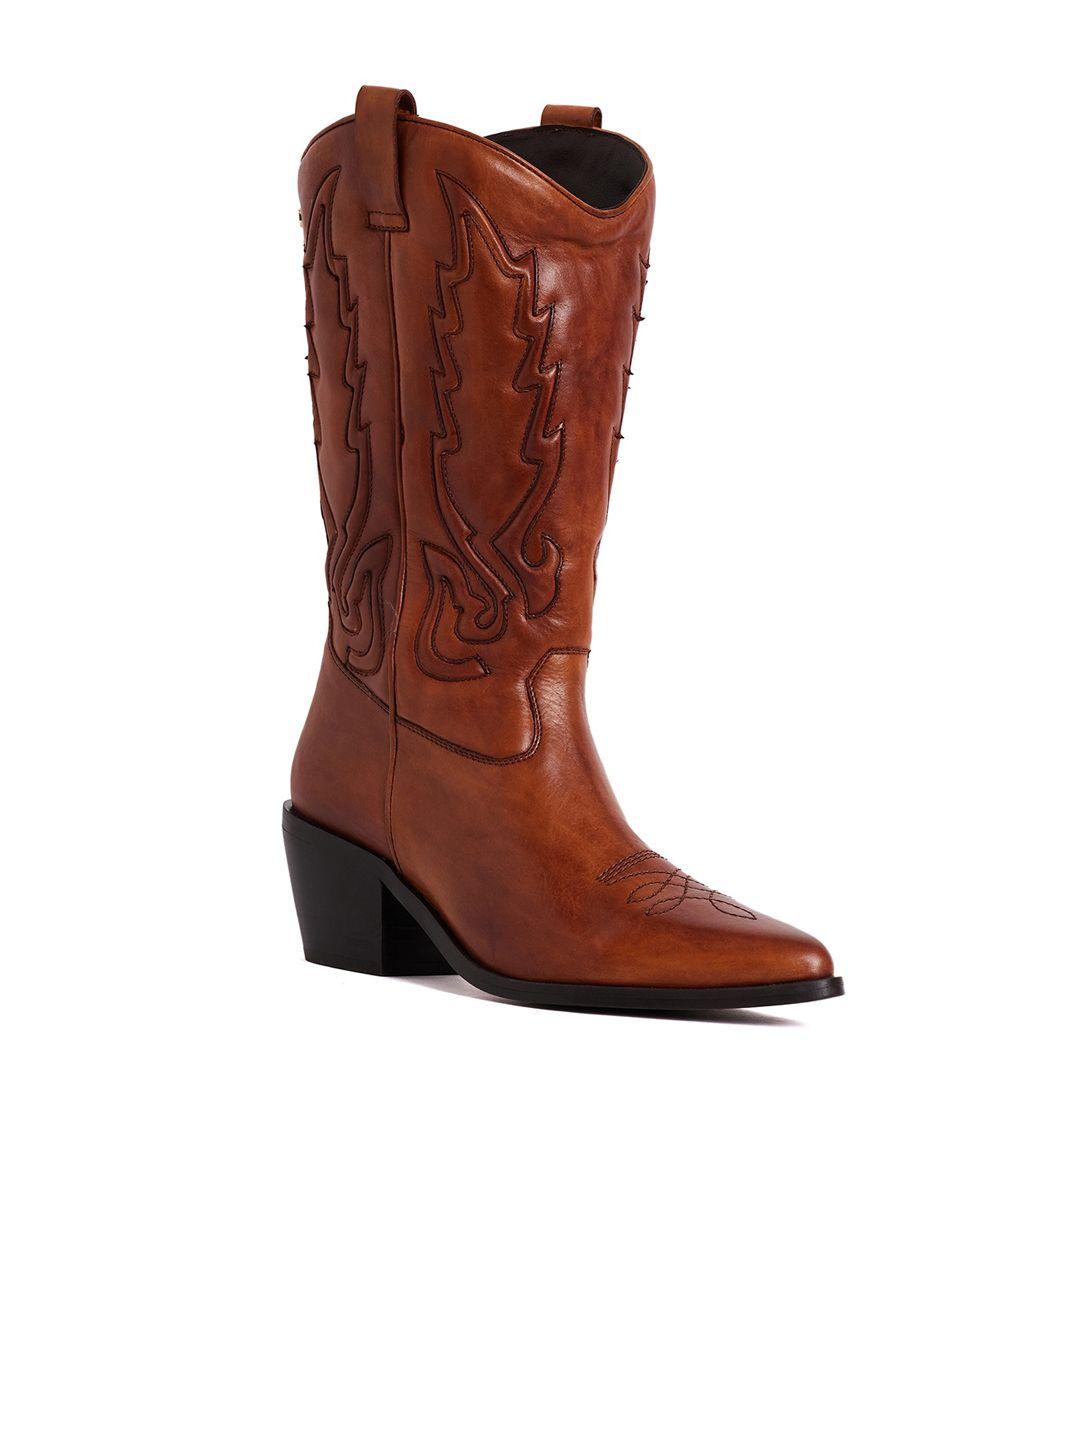 peach flores women grace block-heeled leather high-top cowboy boots